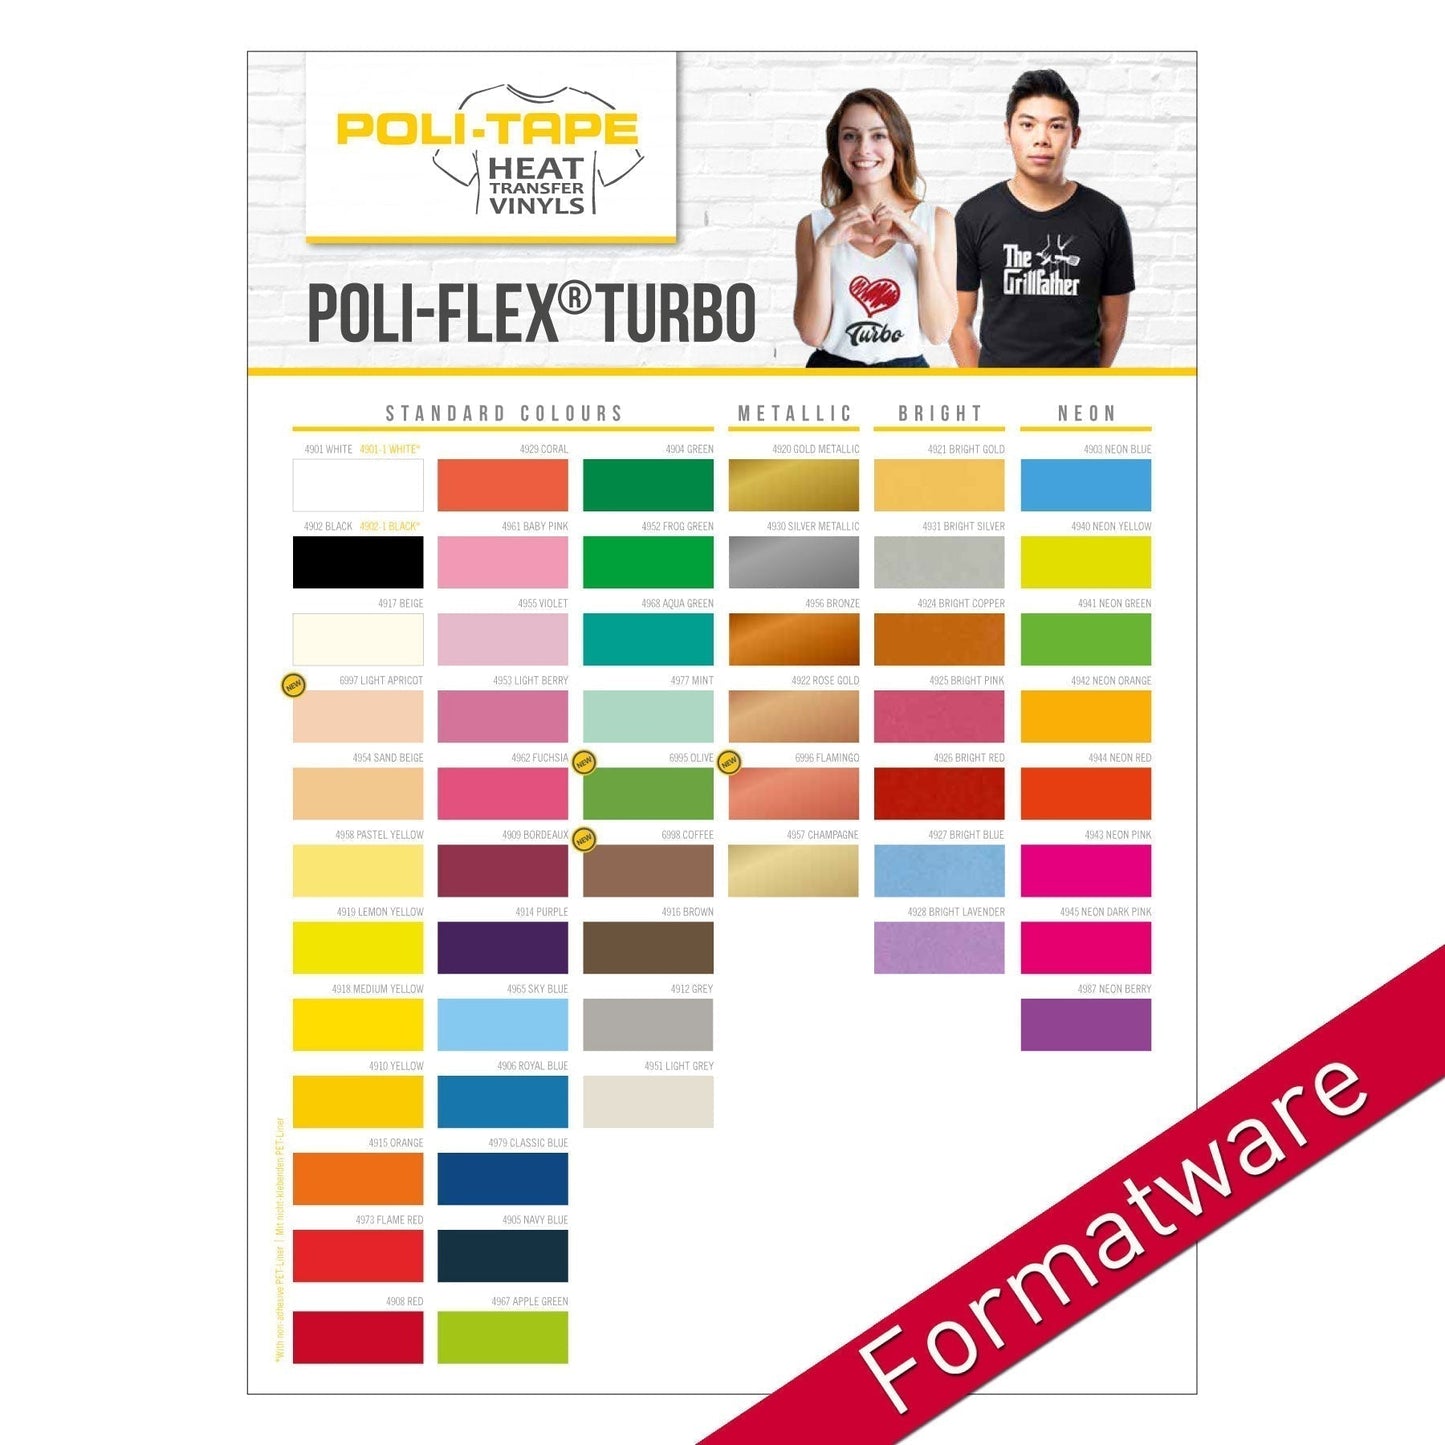 POLI-FLEX TURBO "OLIVE" 6995 A4 FORMATWARE